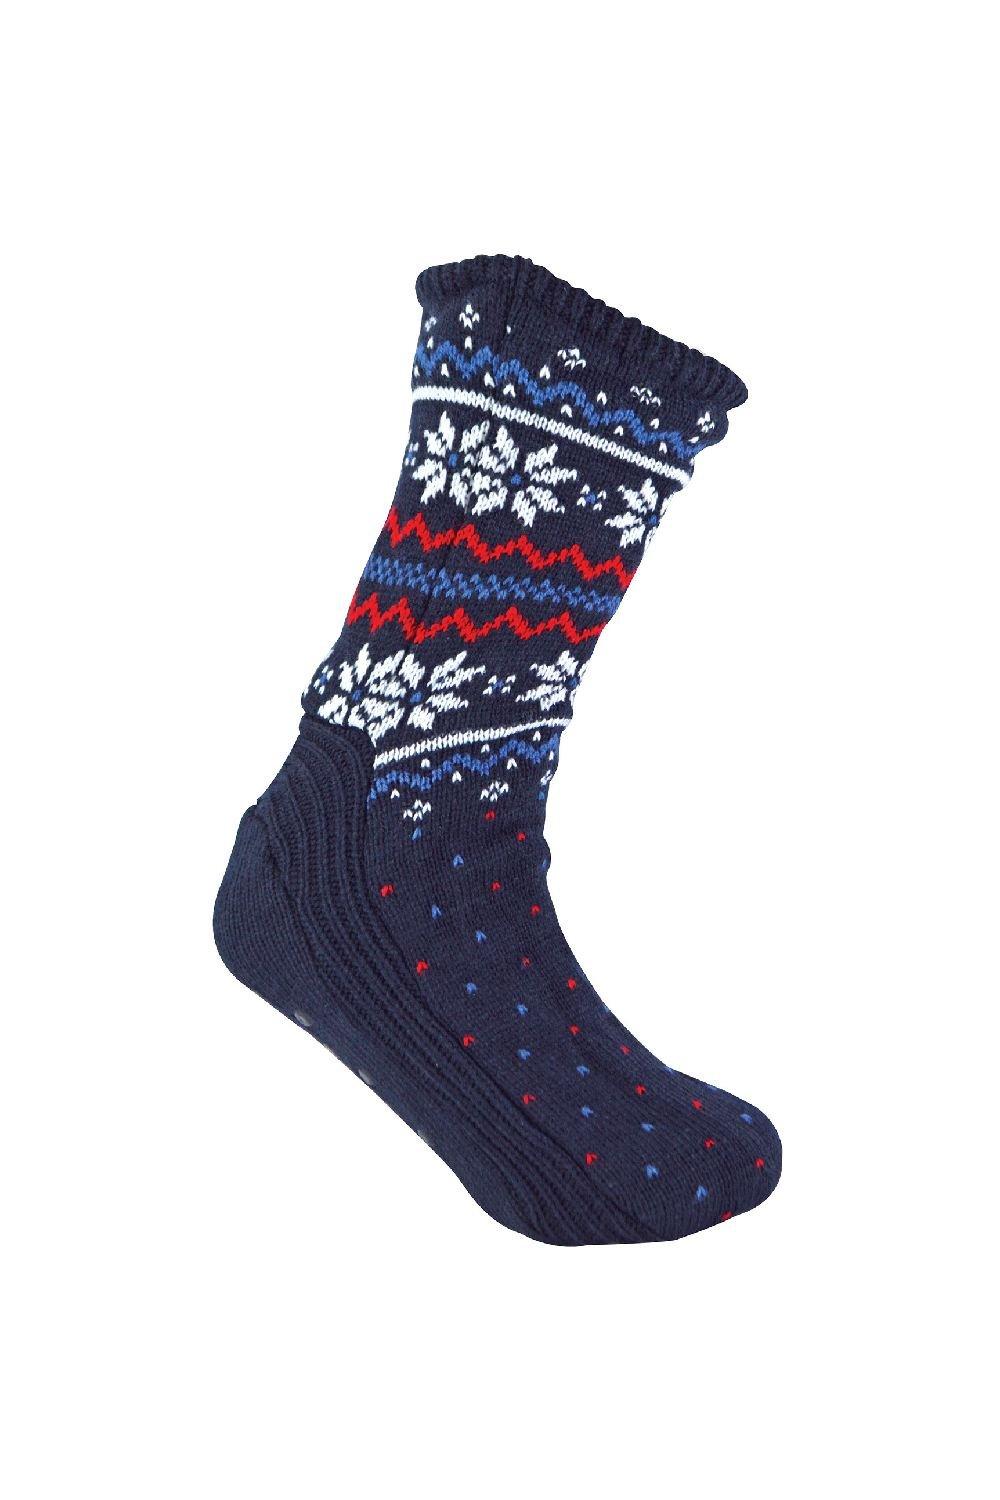 Warm Winter Fairisle Pattern Bootie Socks with Non Slip Grippers